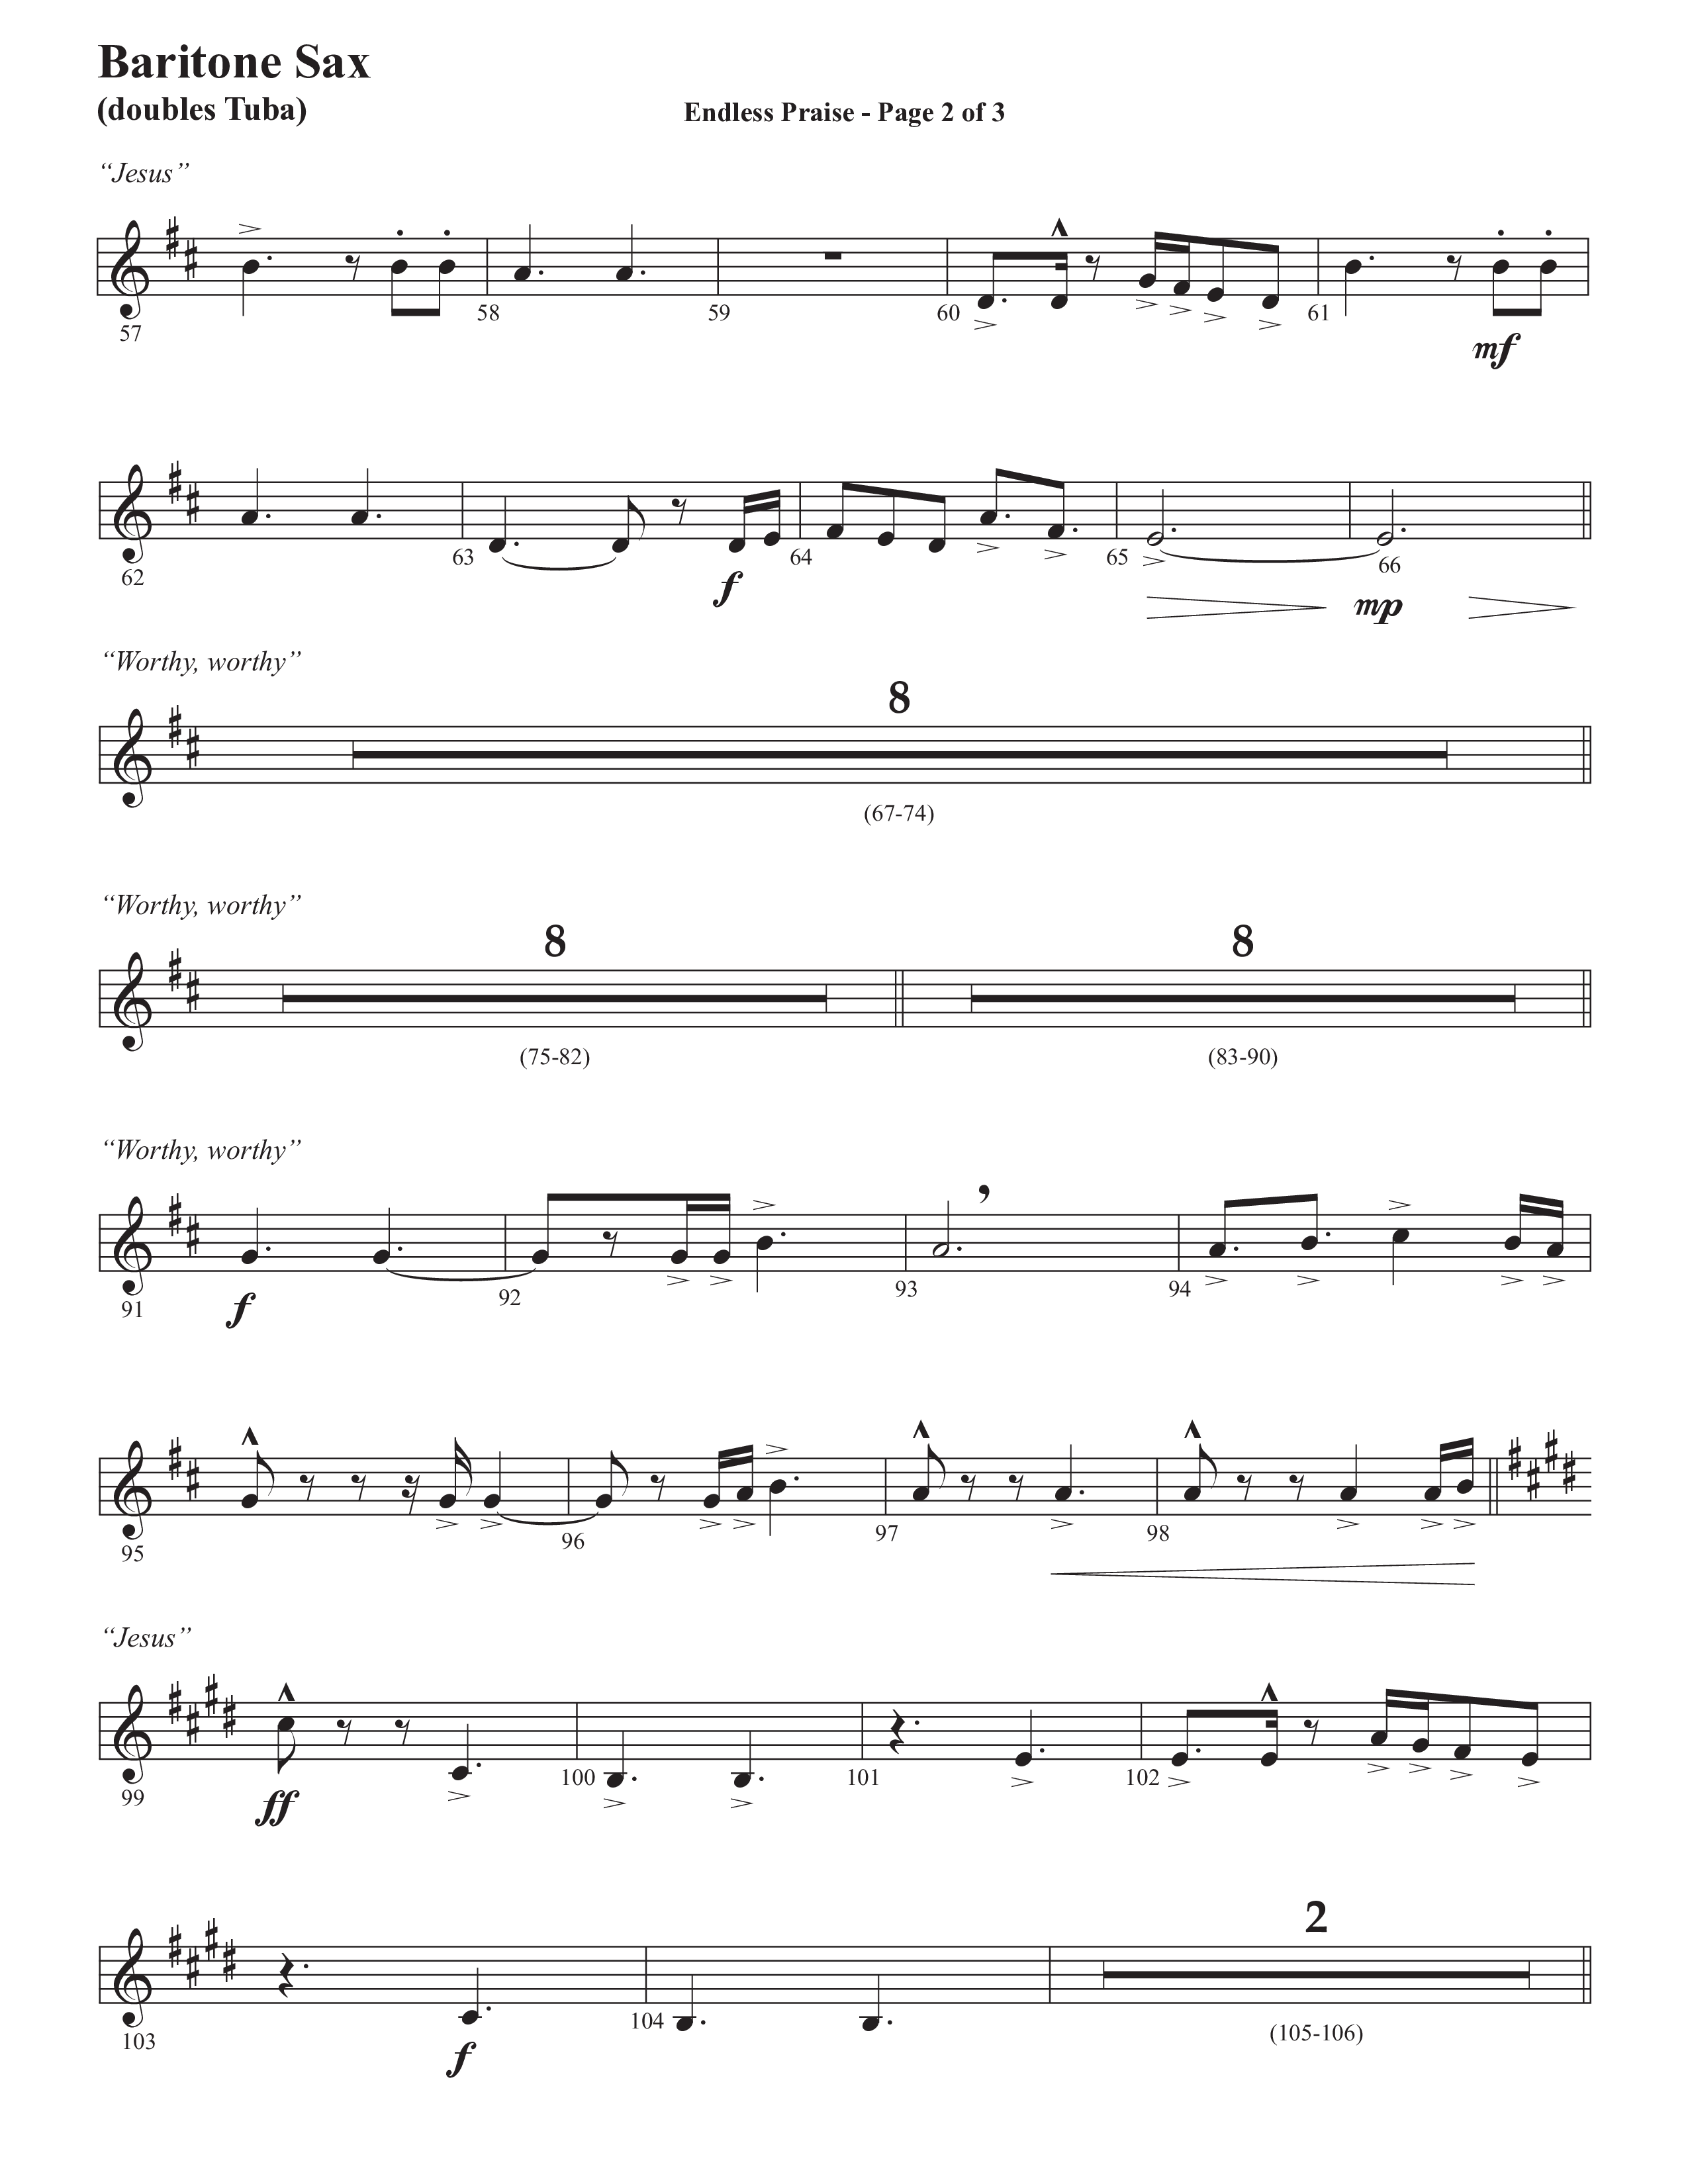 Endless Praise (Choral Anthem SATB) Bari Sax (Semsen Music / Arr. Daniel Semsen)